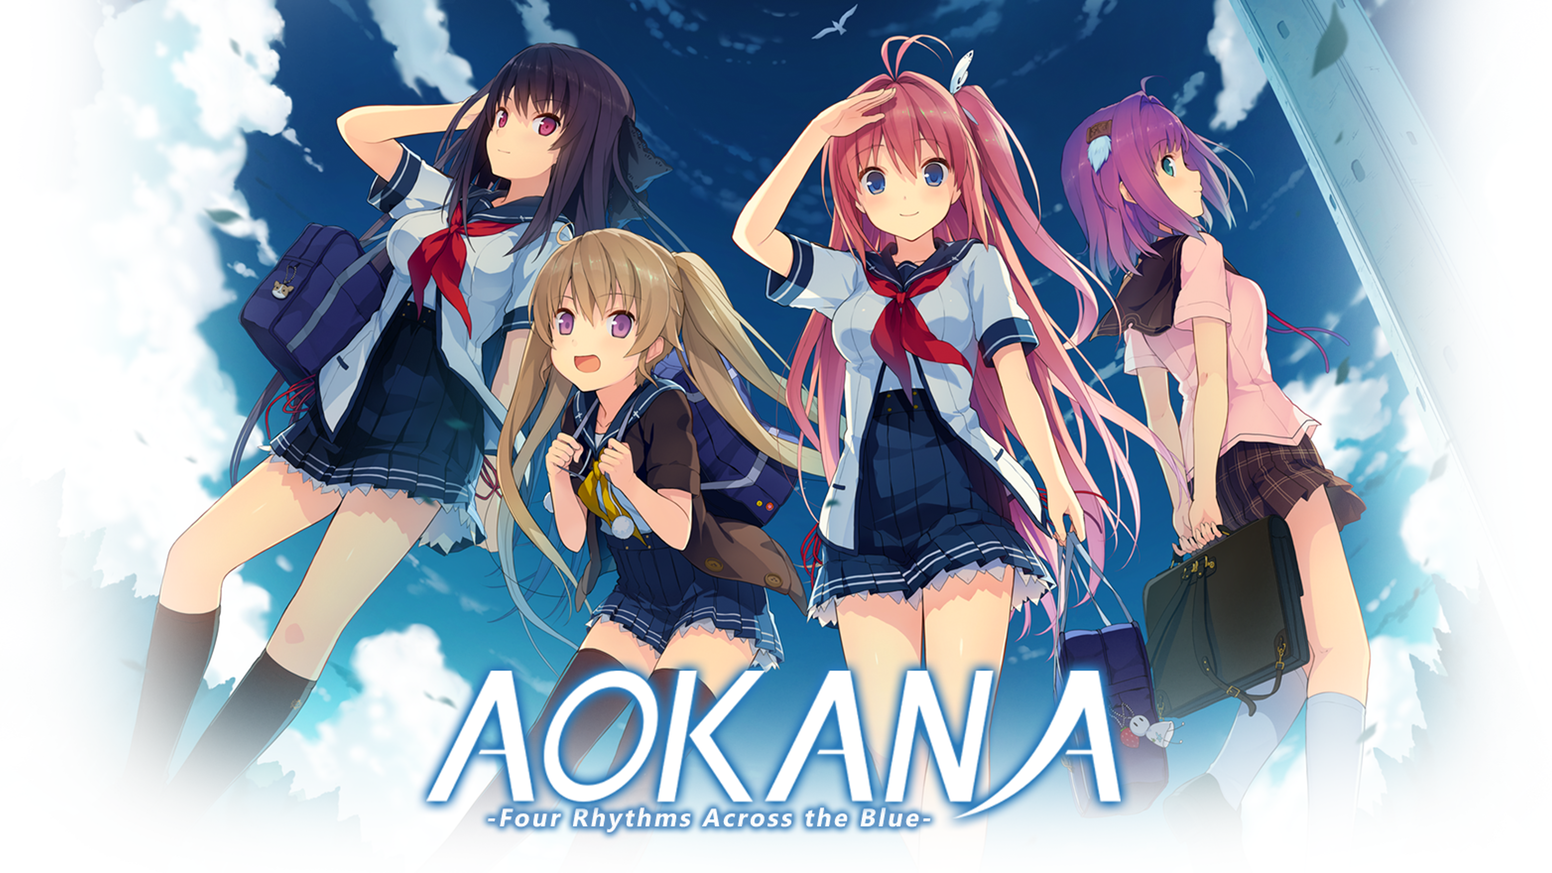 Aokana four rhythms across the blue free download